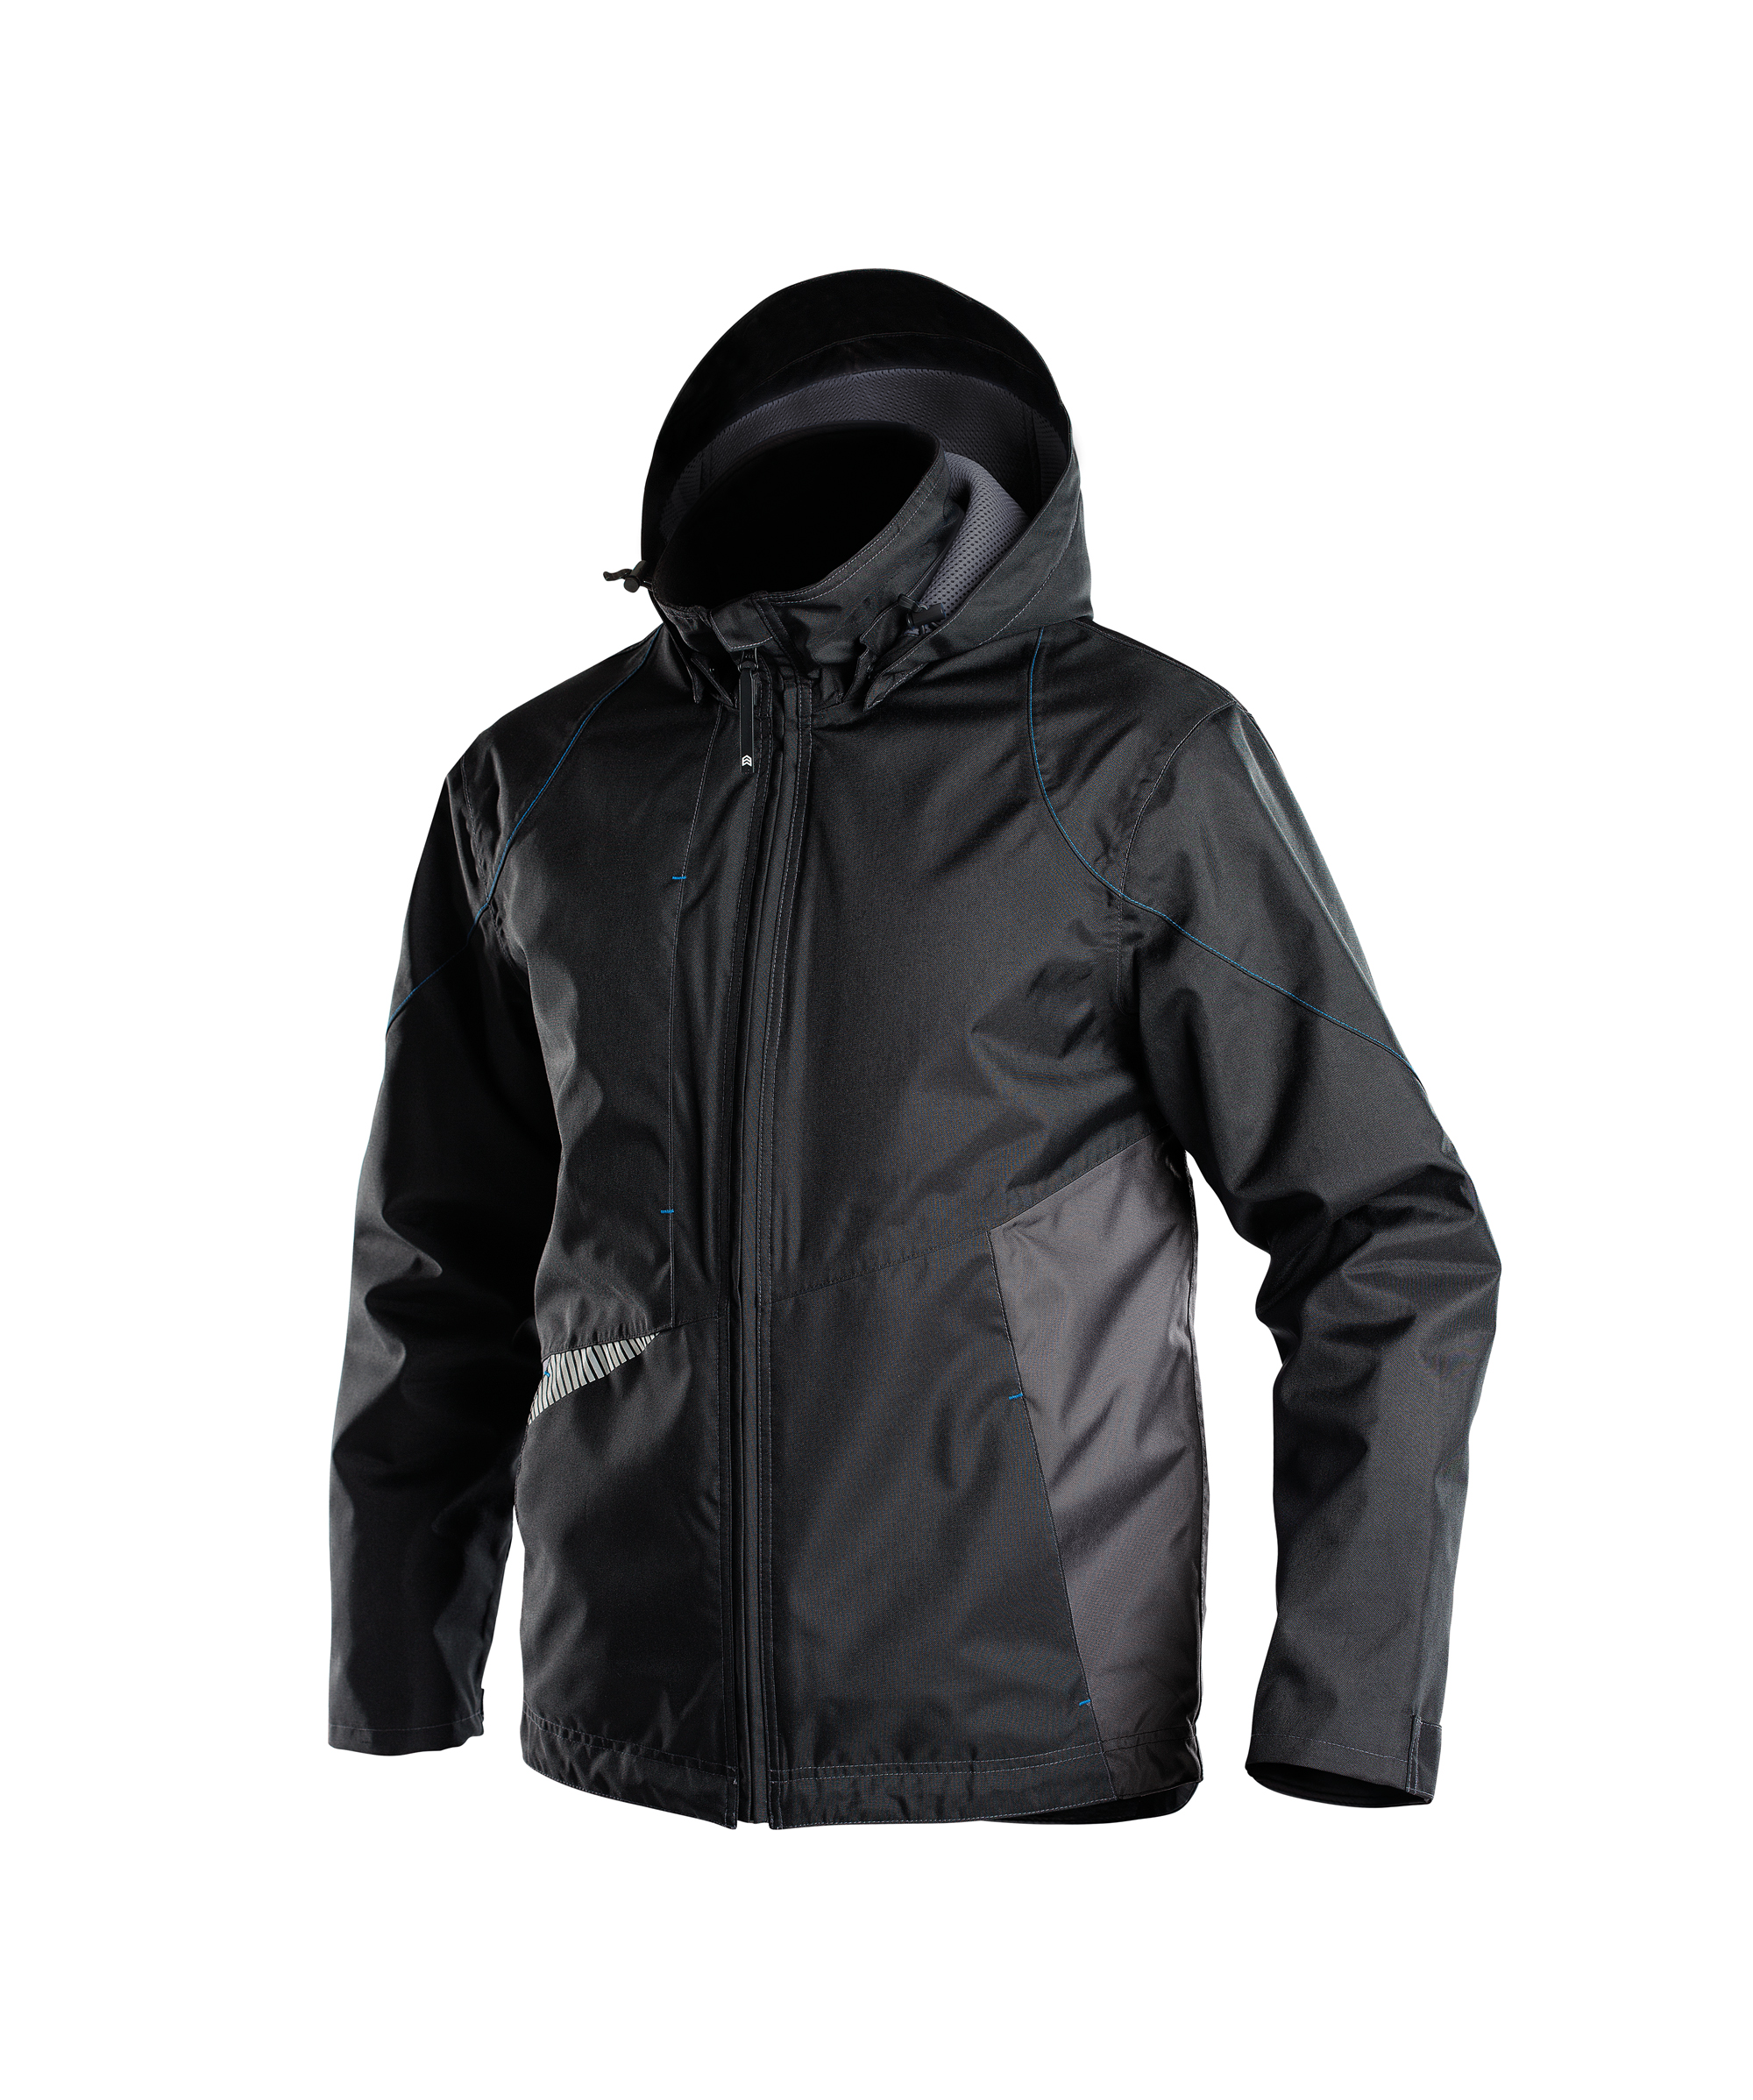 hyper_wind-and-waterproof-work-jacket_black-anthracite-grey_front.jpg